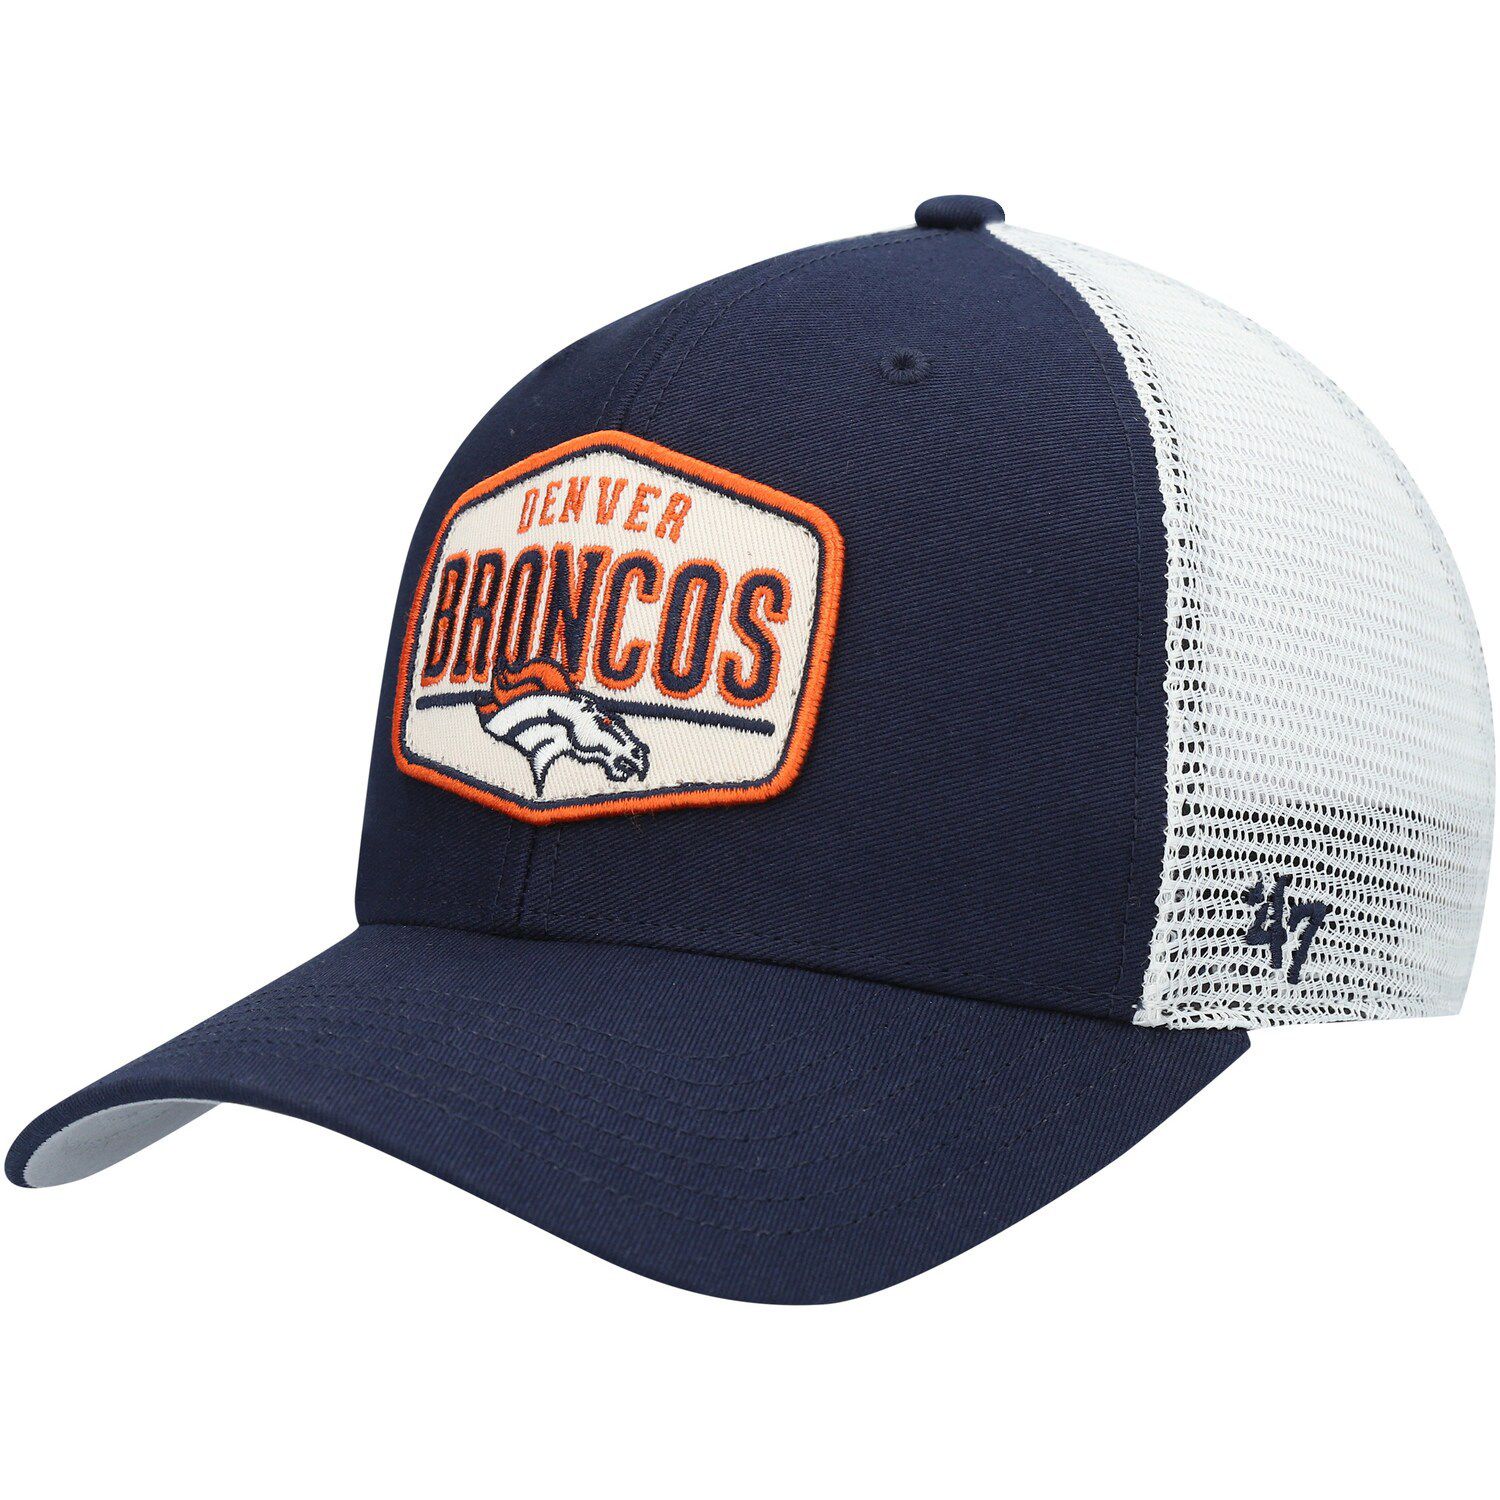 Image for Unbranded Men's '47 Navy Denver Broncos Shumay MVP Snapback Hat at Kohl's.